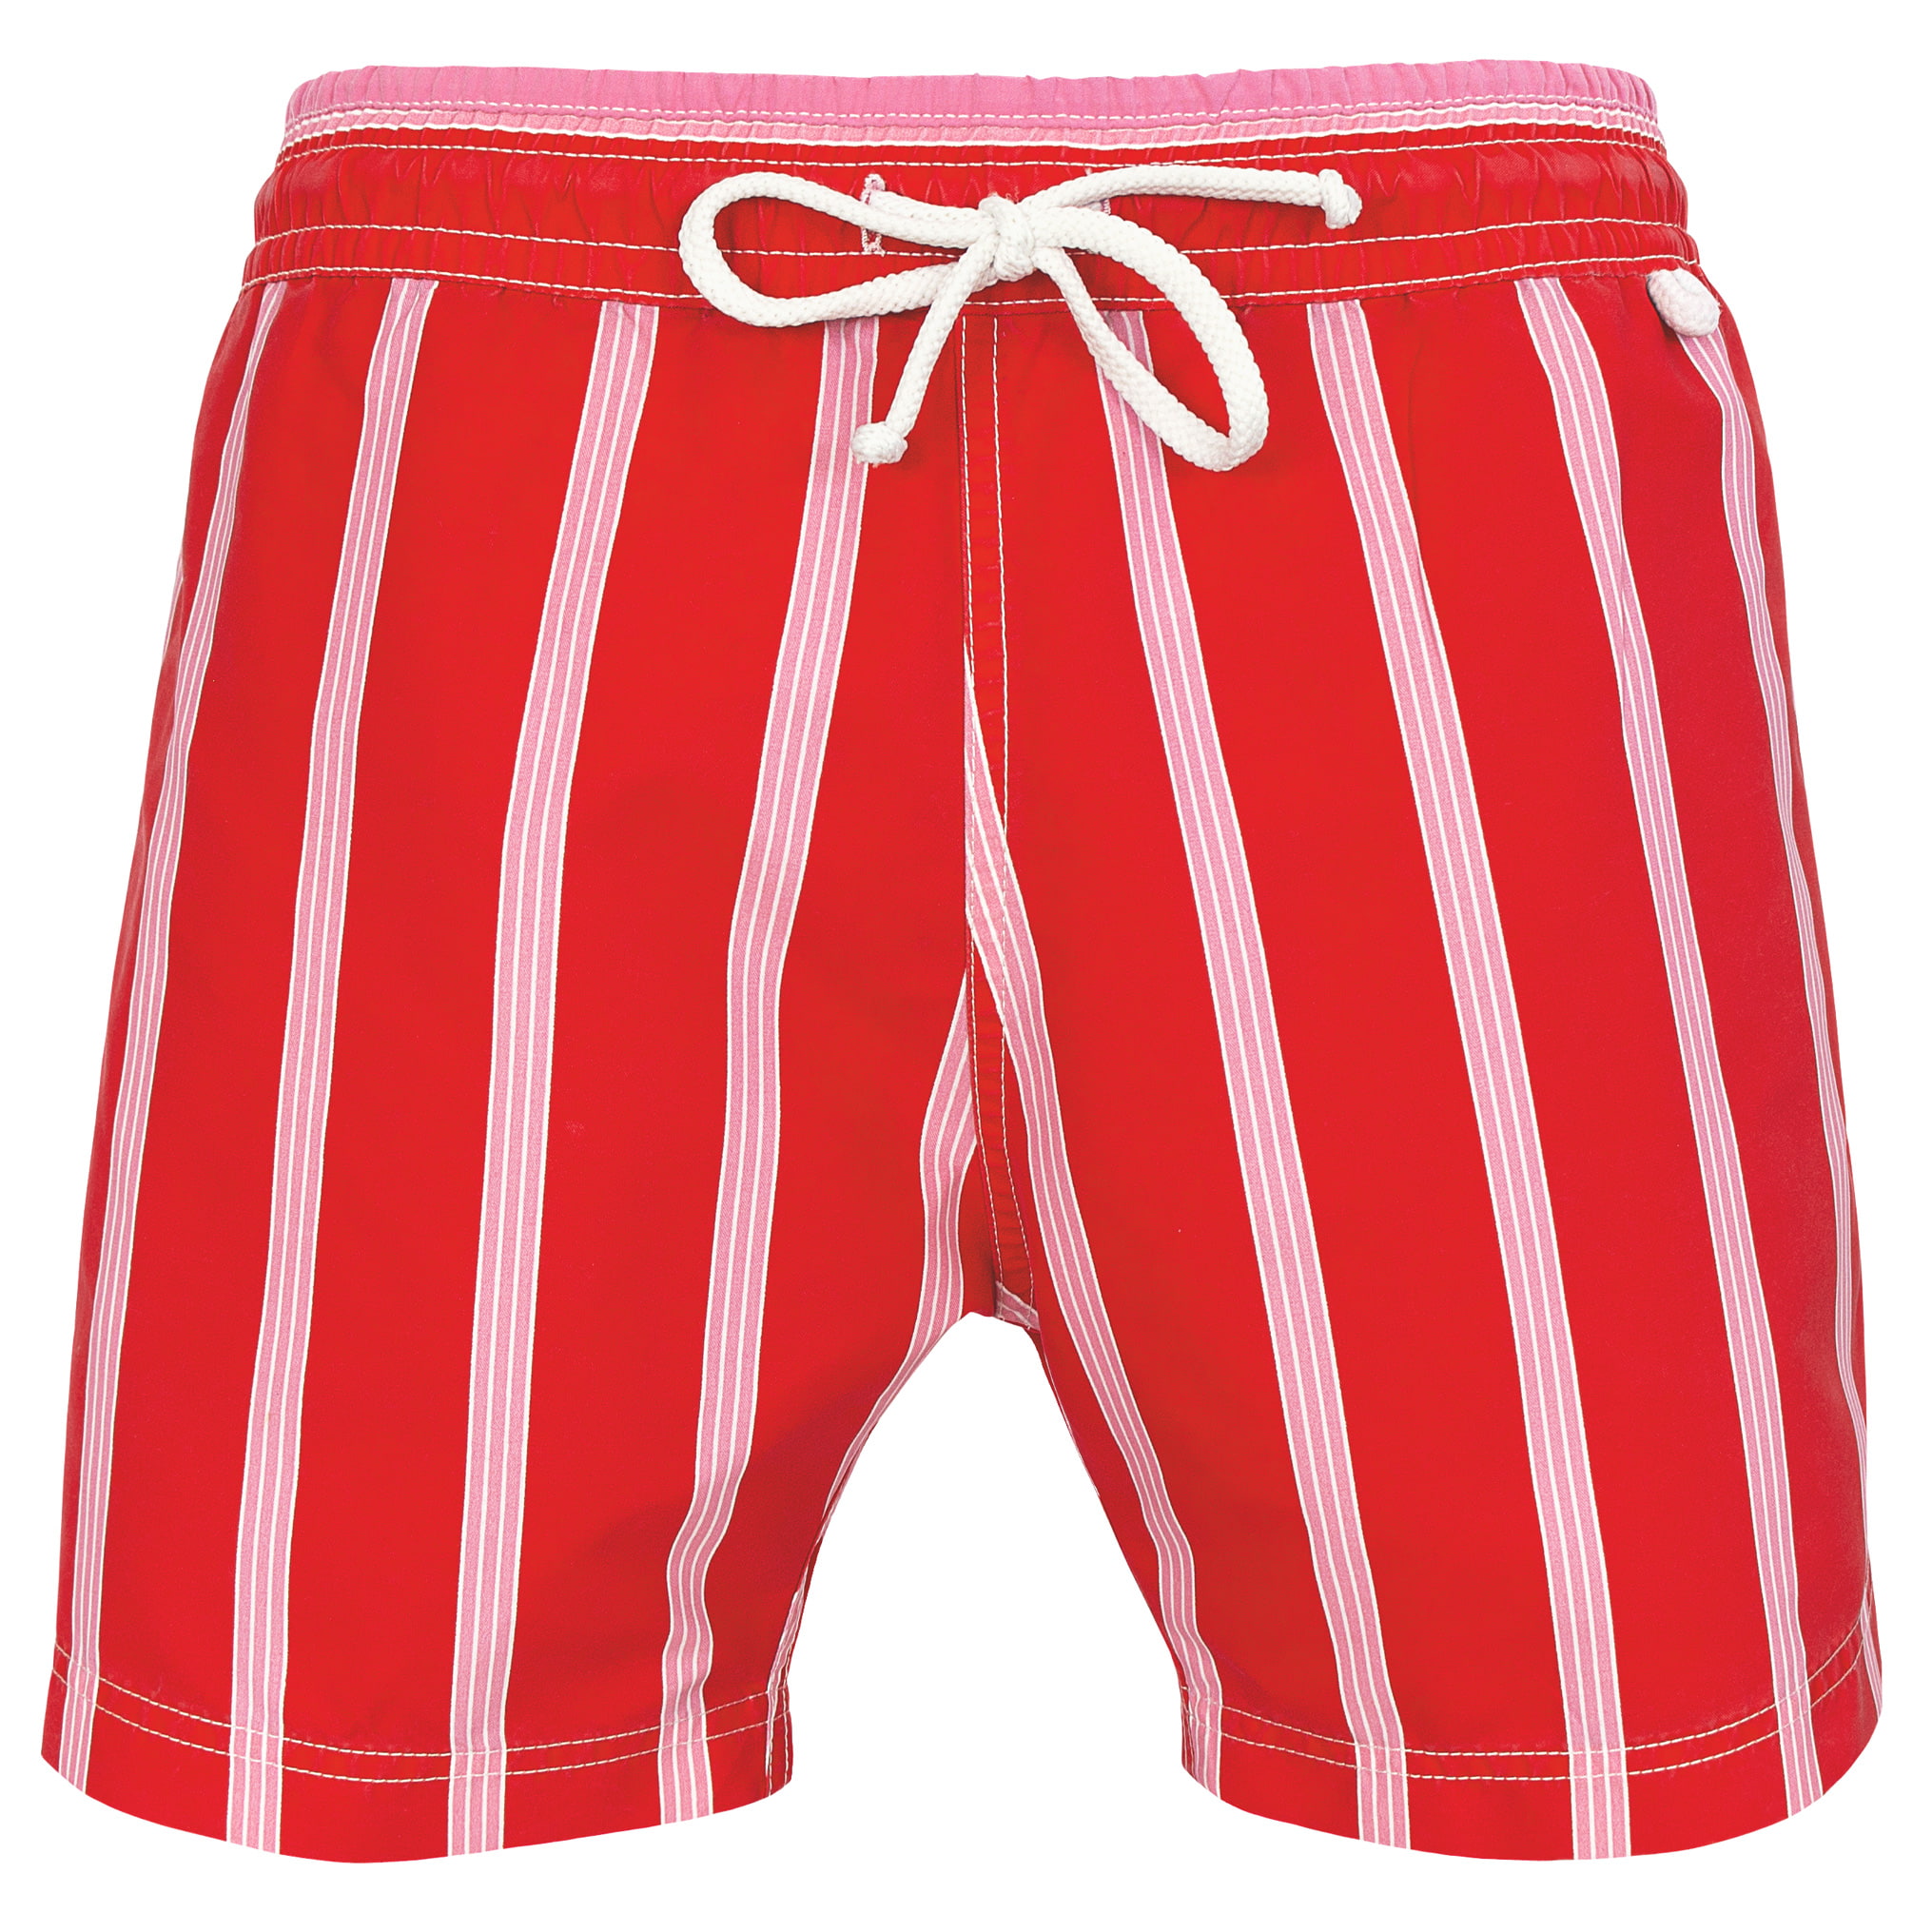 Newjim 683 - Modal washed stripe | Maillot Short de bain homme rouge rayé rose